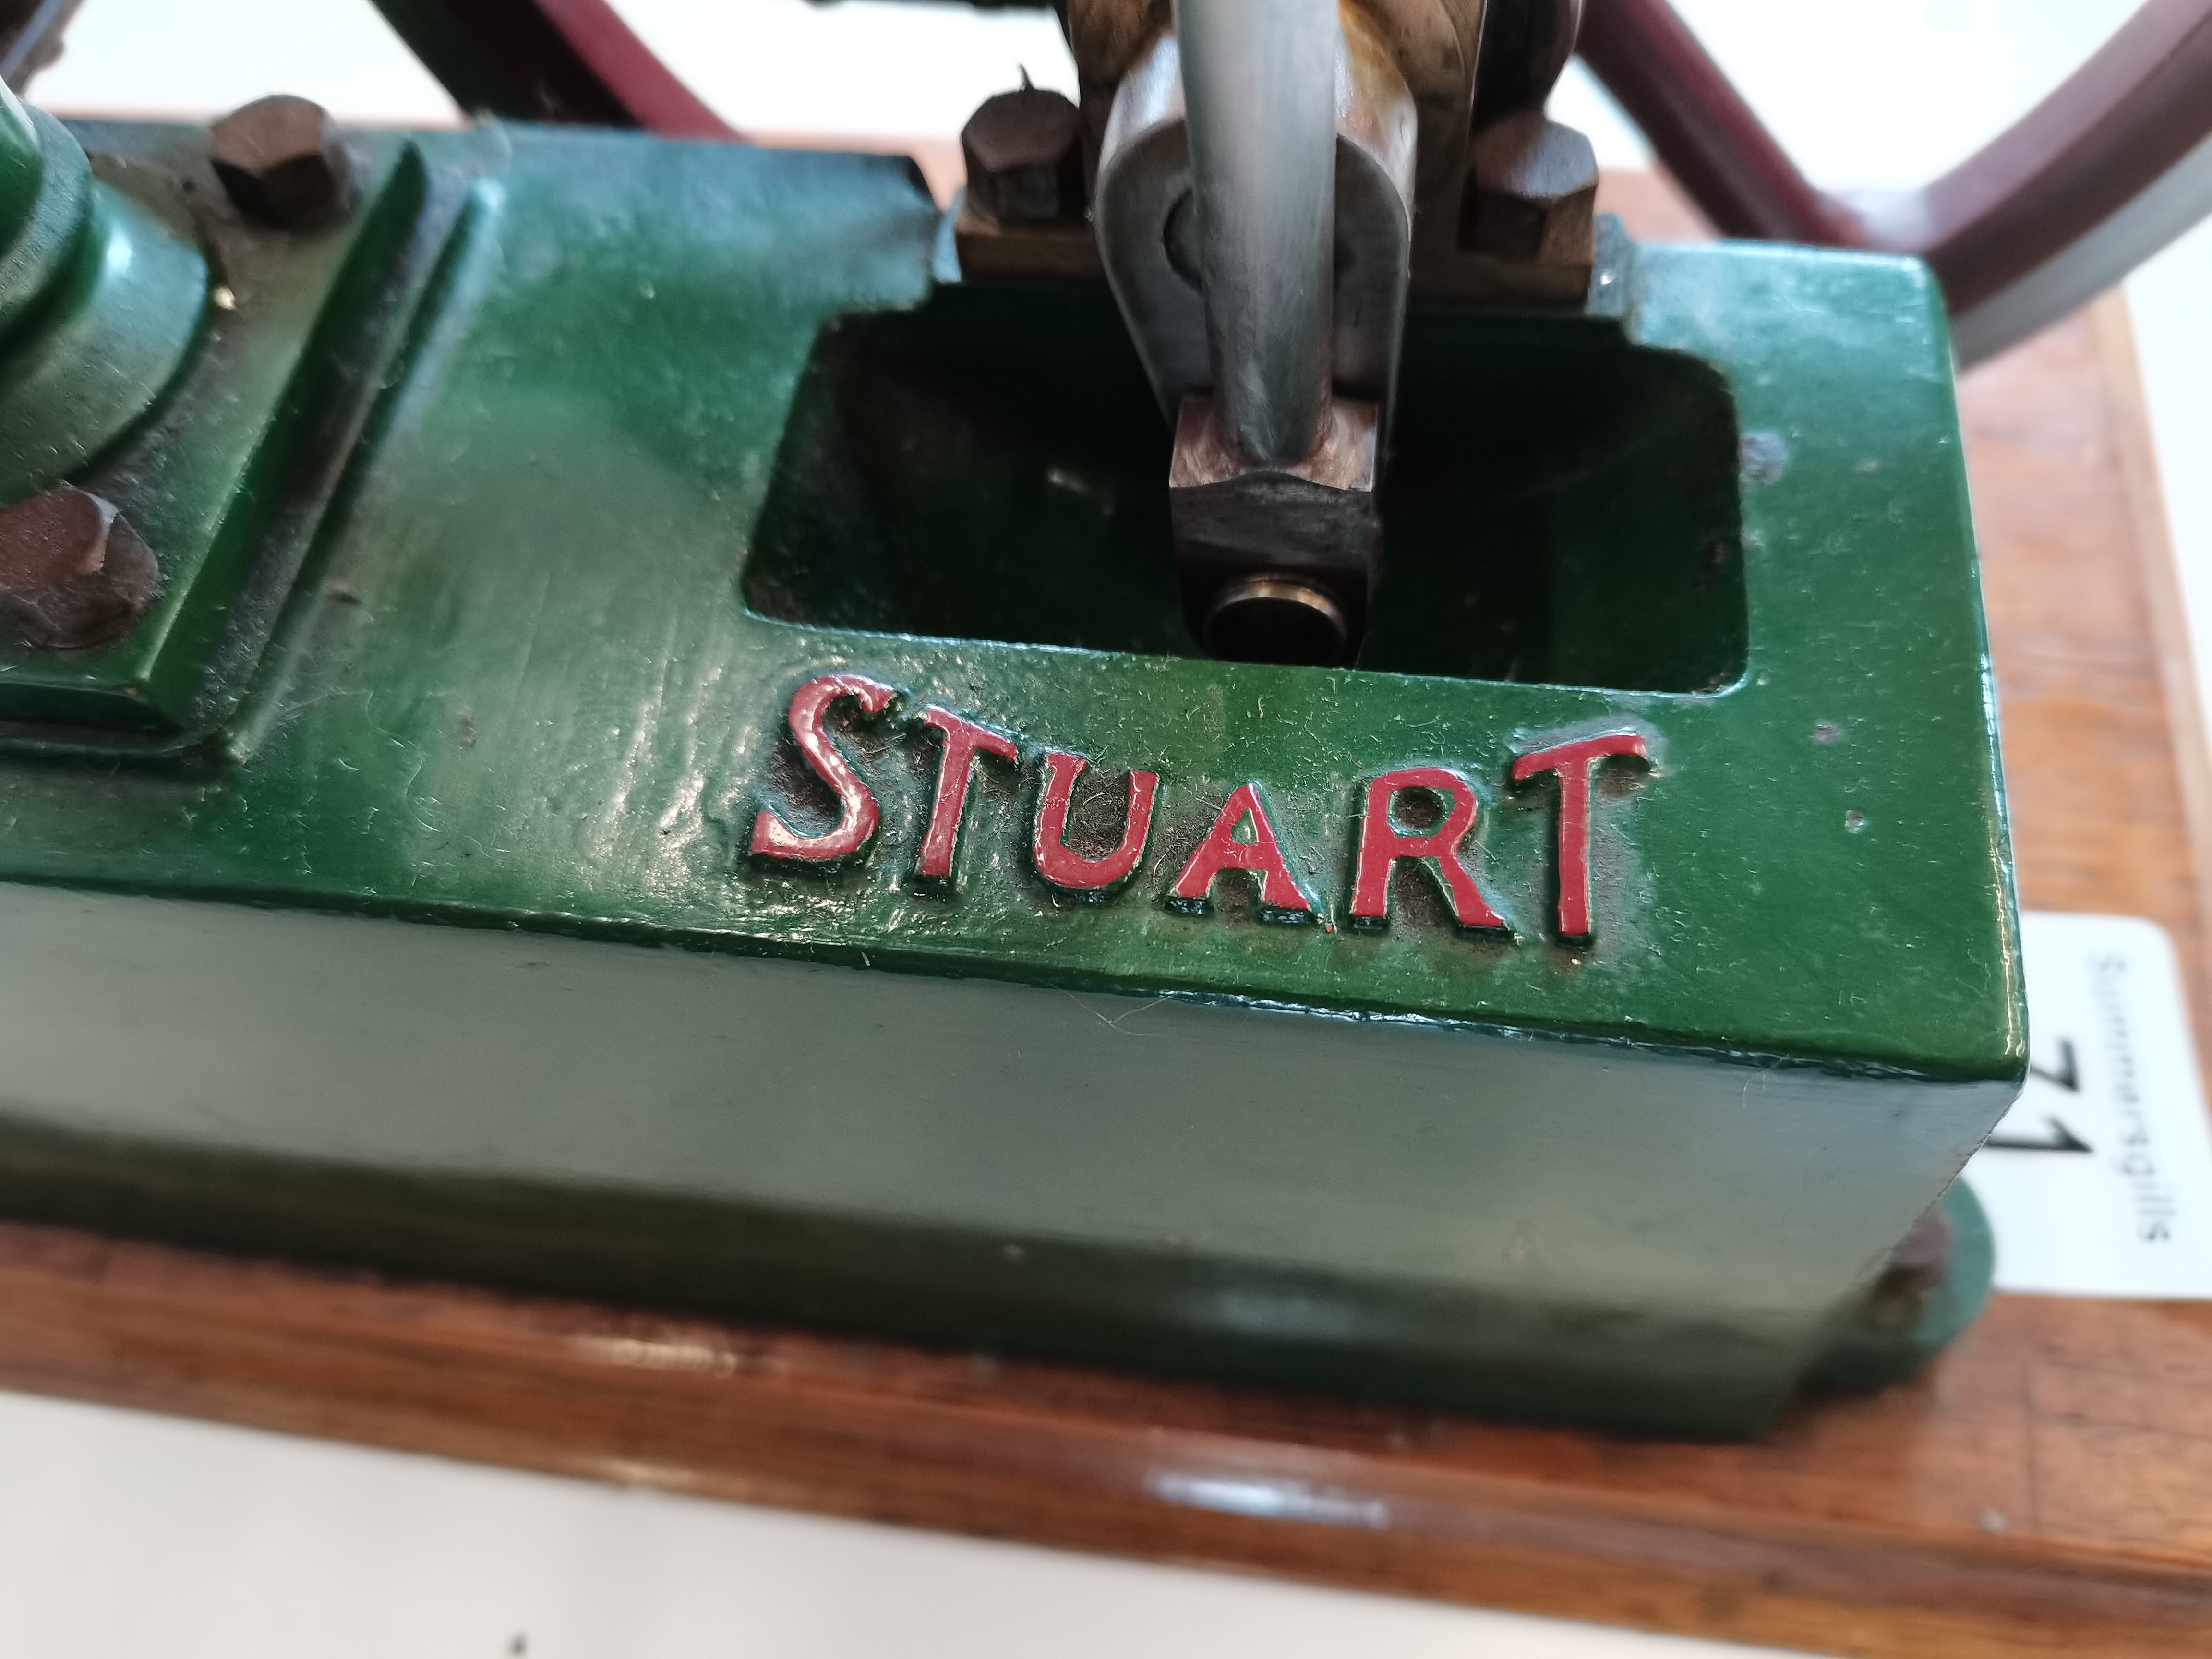 Steam Engine made by Stuart 35cm x 30cm - Image 3 of 3